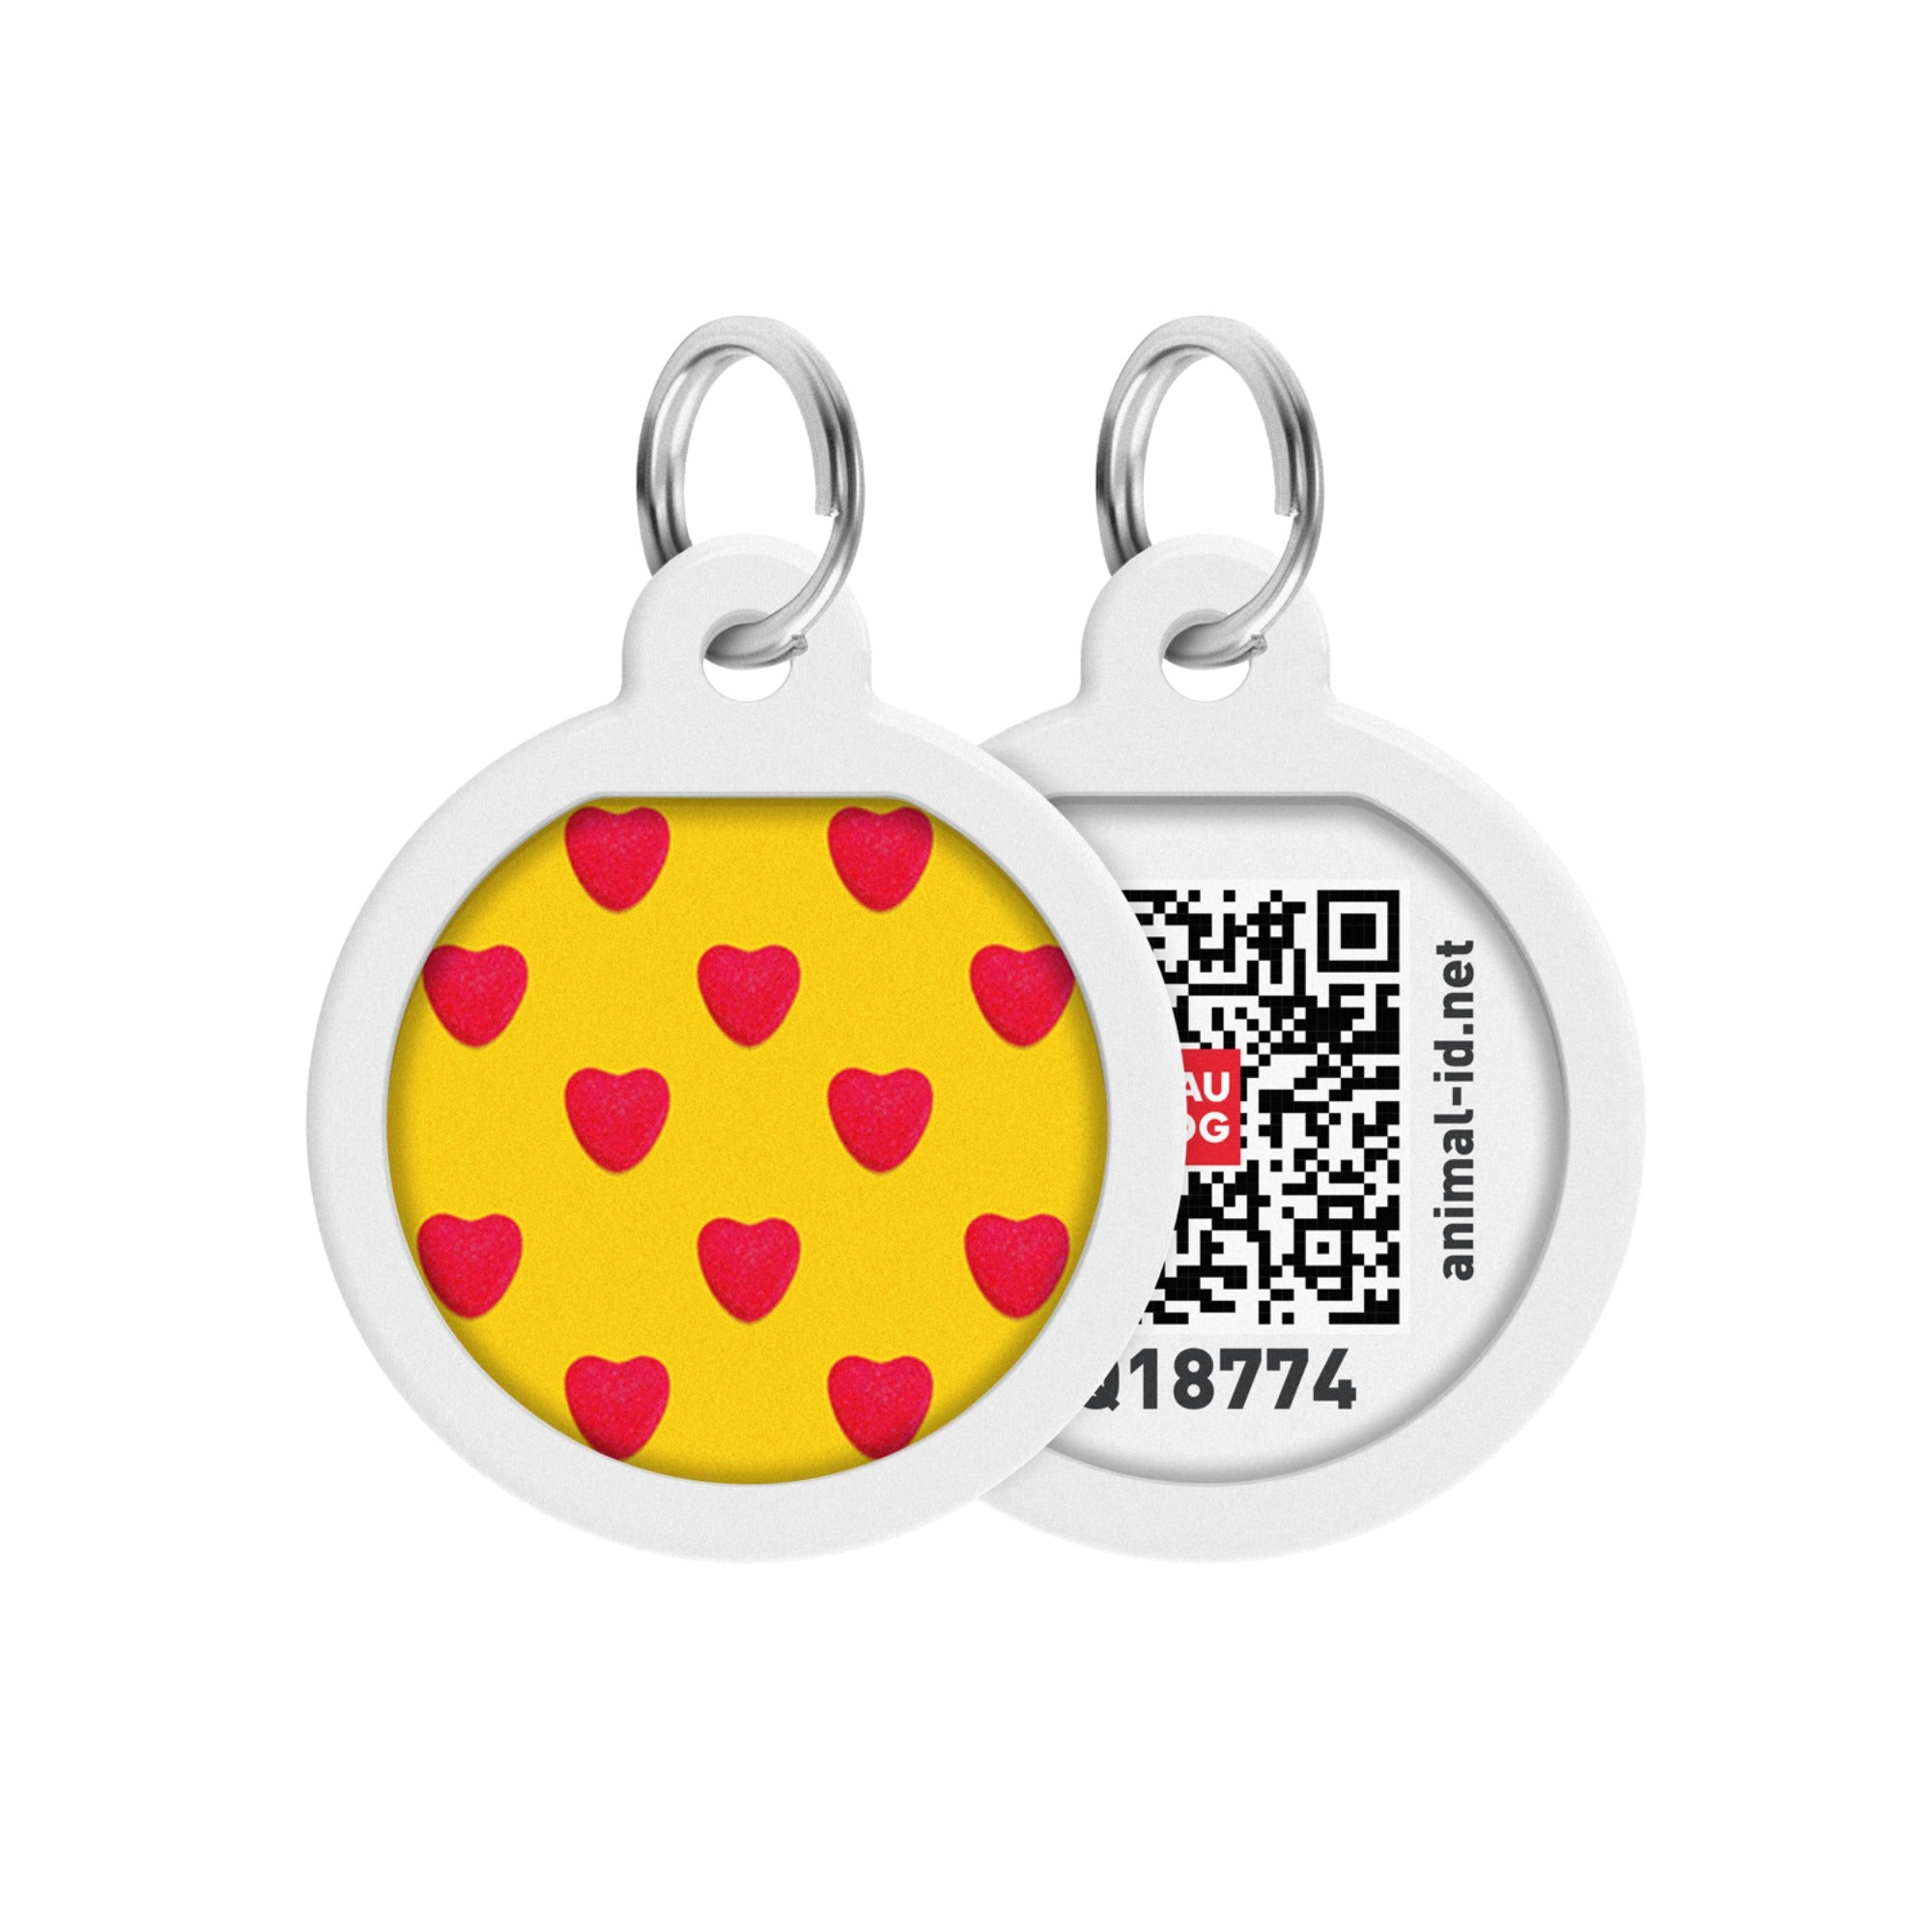 Smart ID Tag - Hearts design